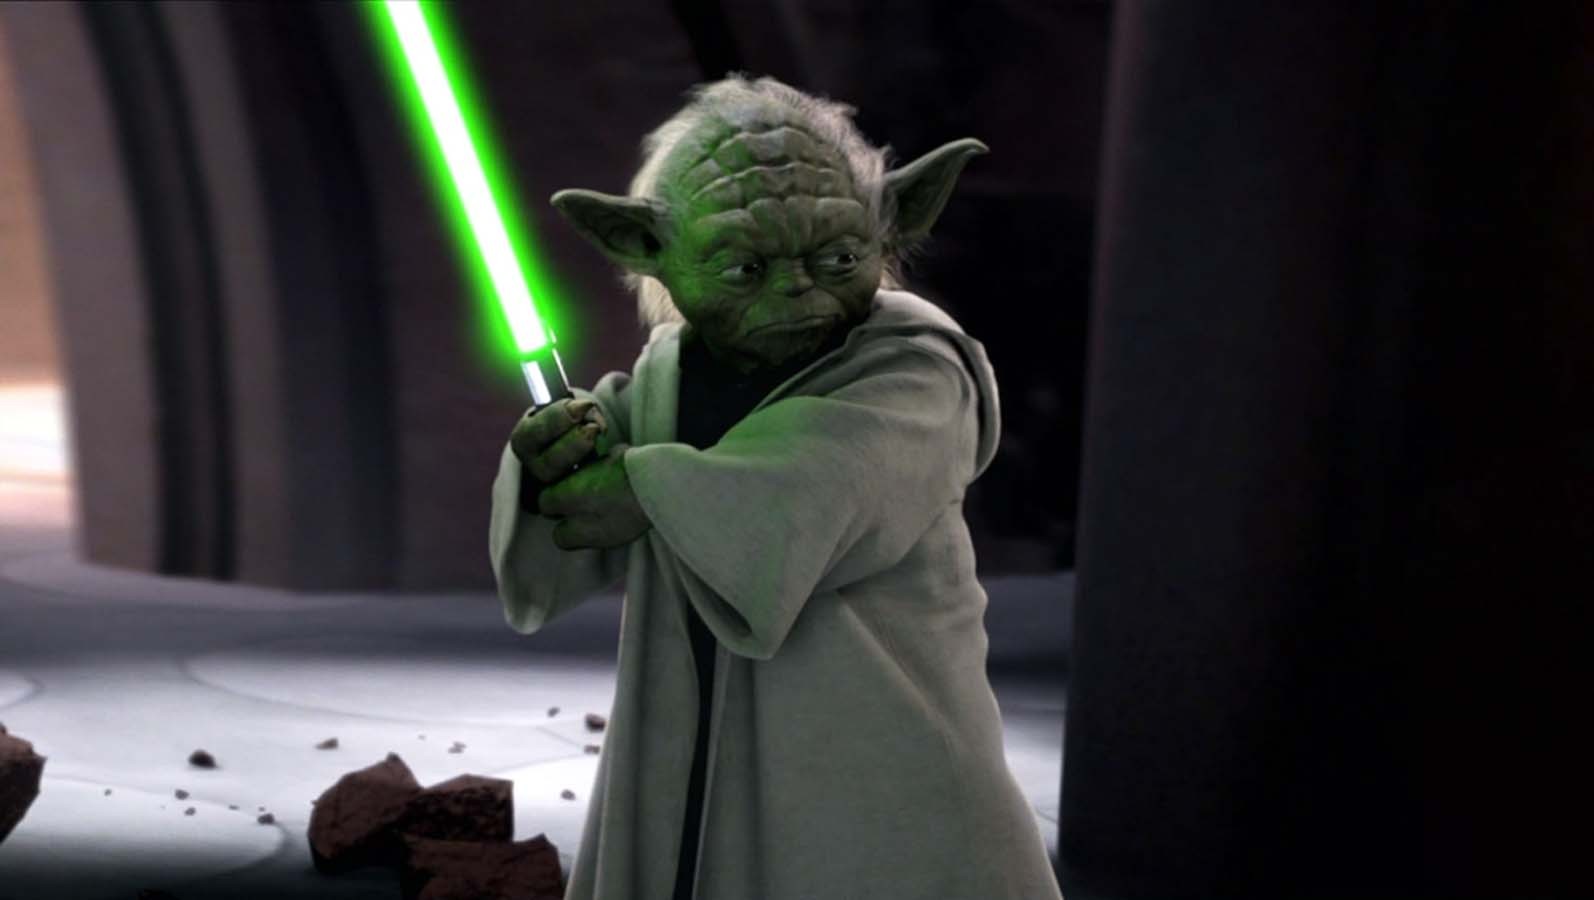 General 1594x900 Star Wars Yoda Jedi Star Wars: Episode II - Attack of the Clones lightsaber movie scenes CGI film stills science fiction movies